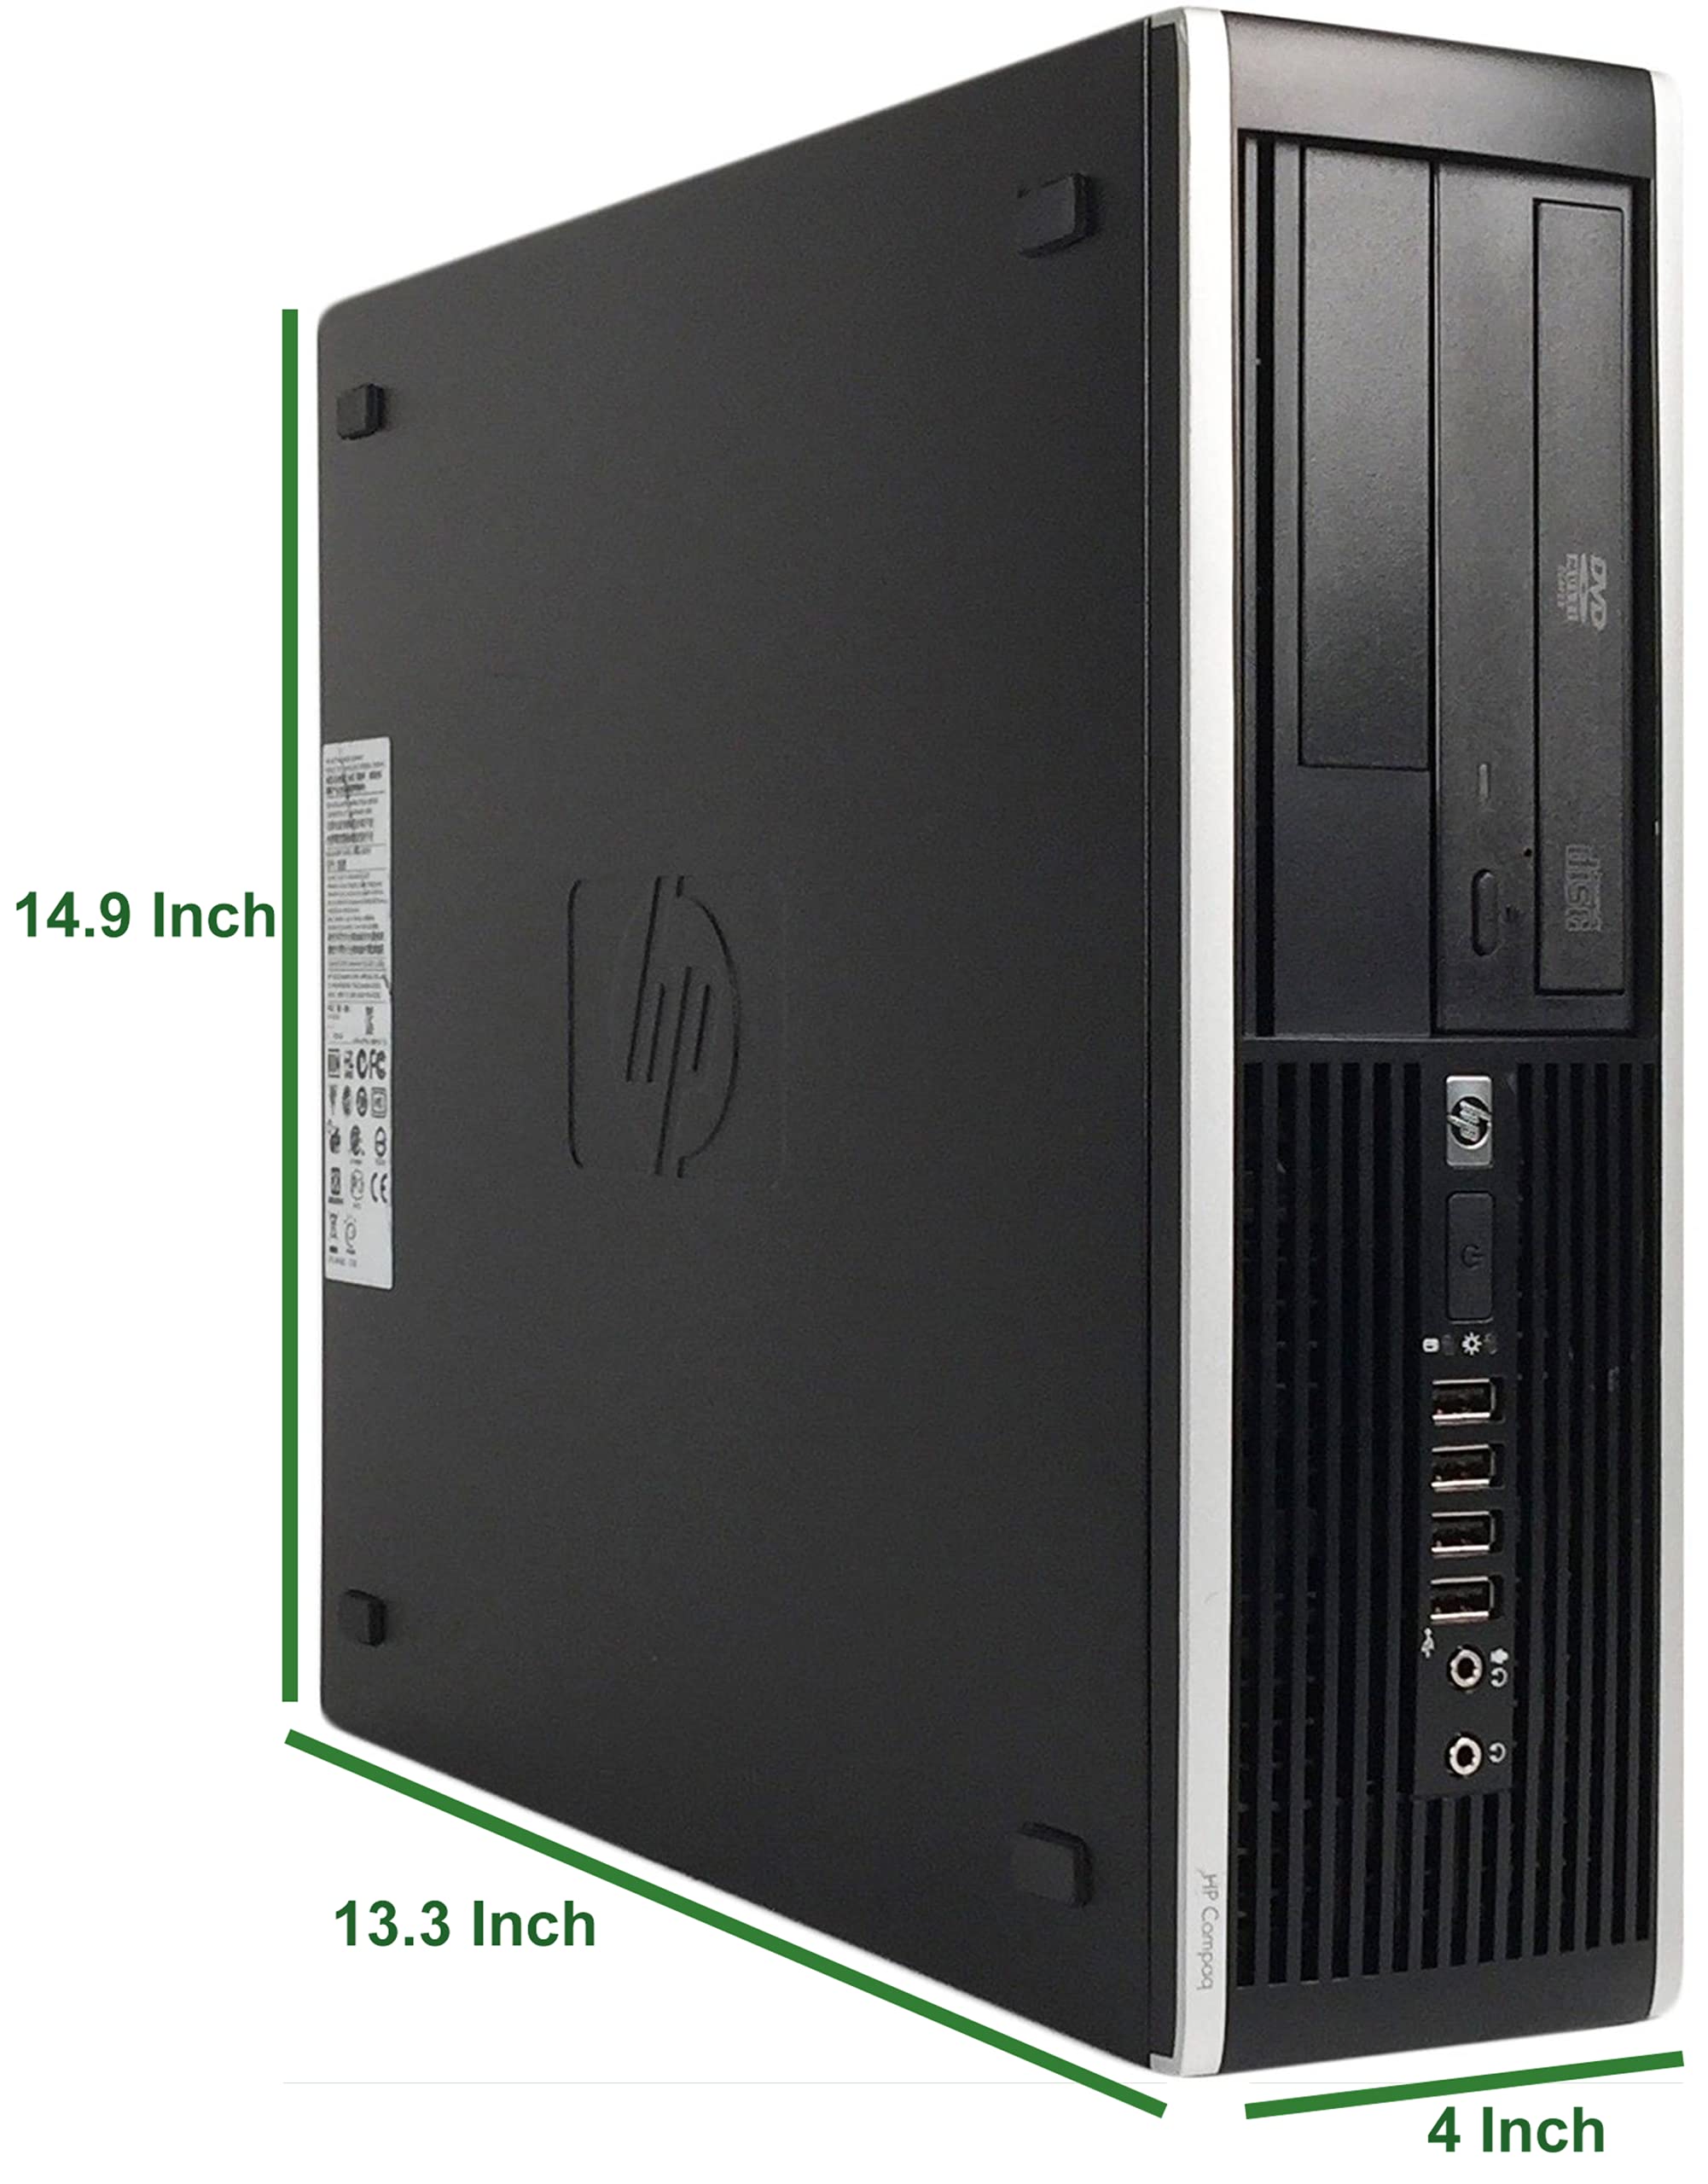 HP 6300 SFF Desktop Computer PC, Intel Core i7 3.4GHZ Processor, 16GB Ram, 512GB M.2 SSD, WiFi & Bluetooth, Wireless Keyboard and Mouse, 24 Inch FHD LED Monitor, Windows 10 (Renewed)